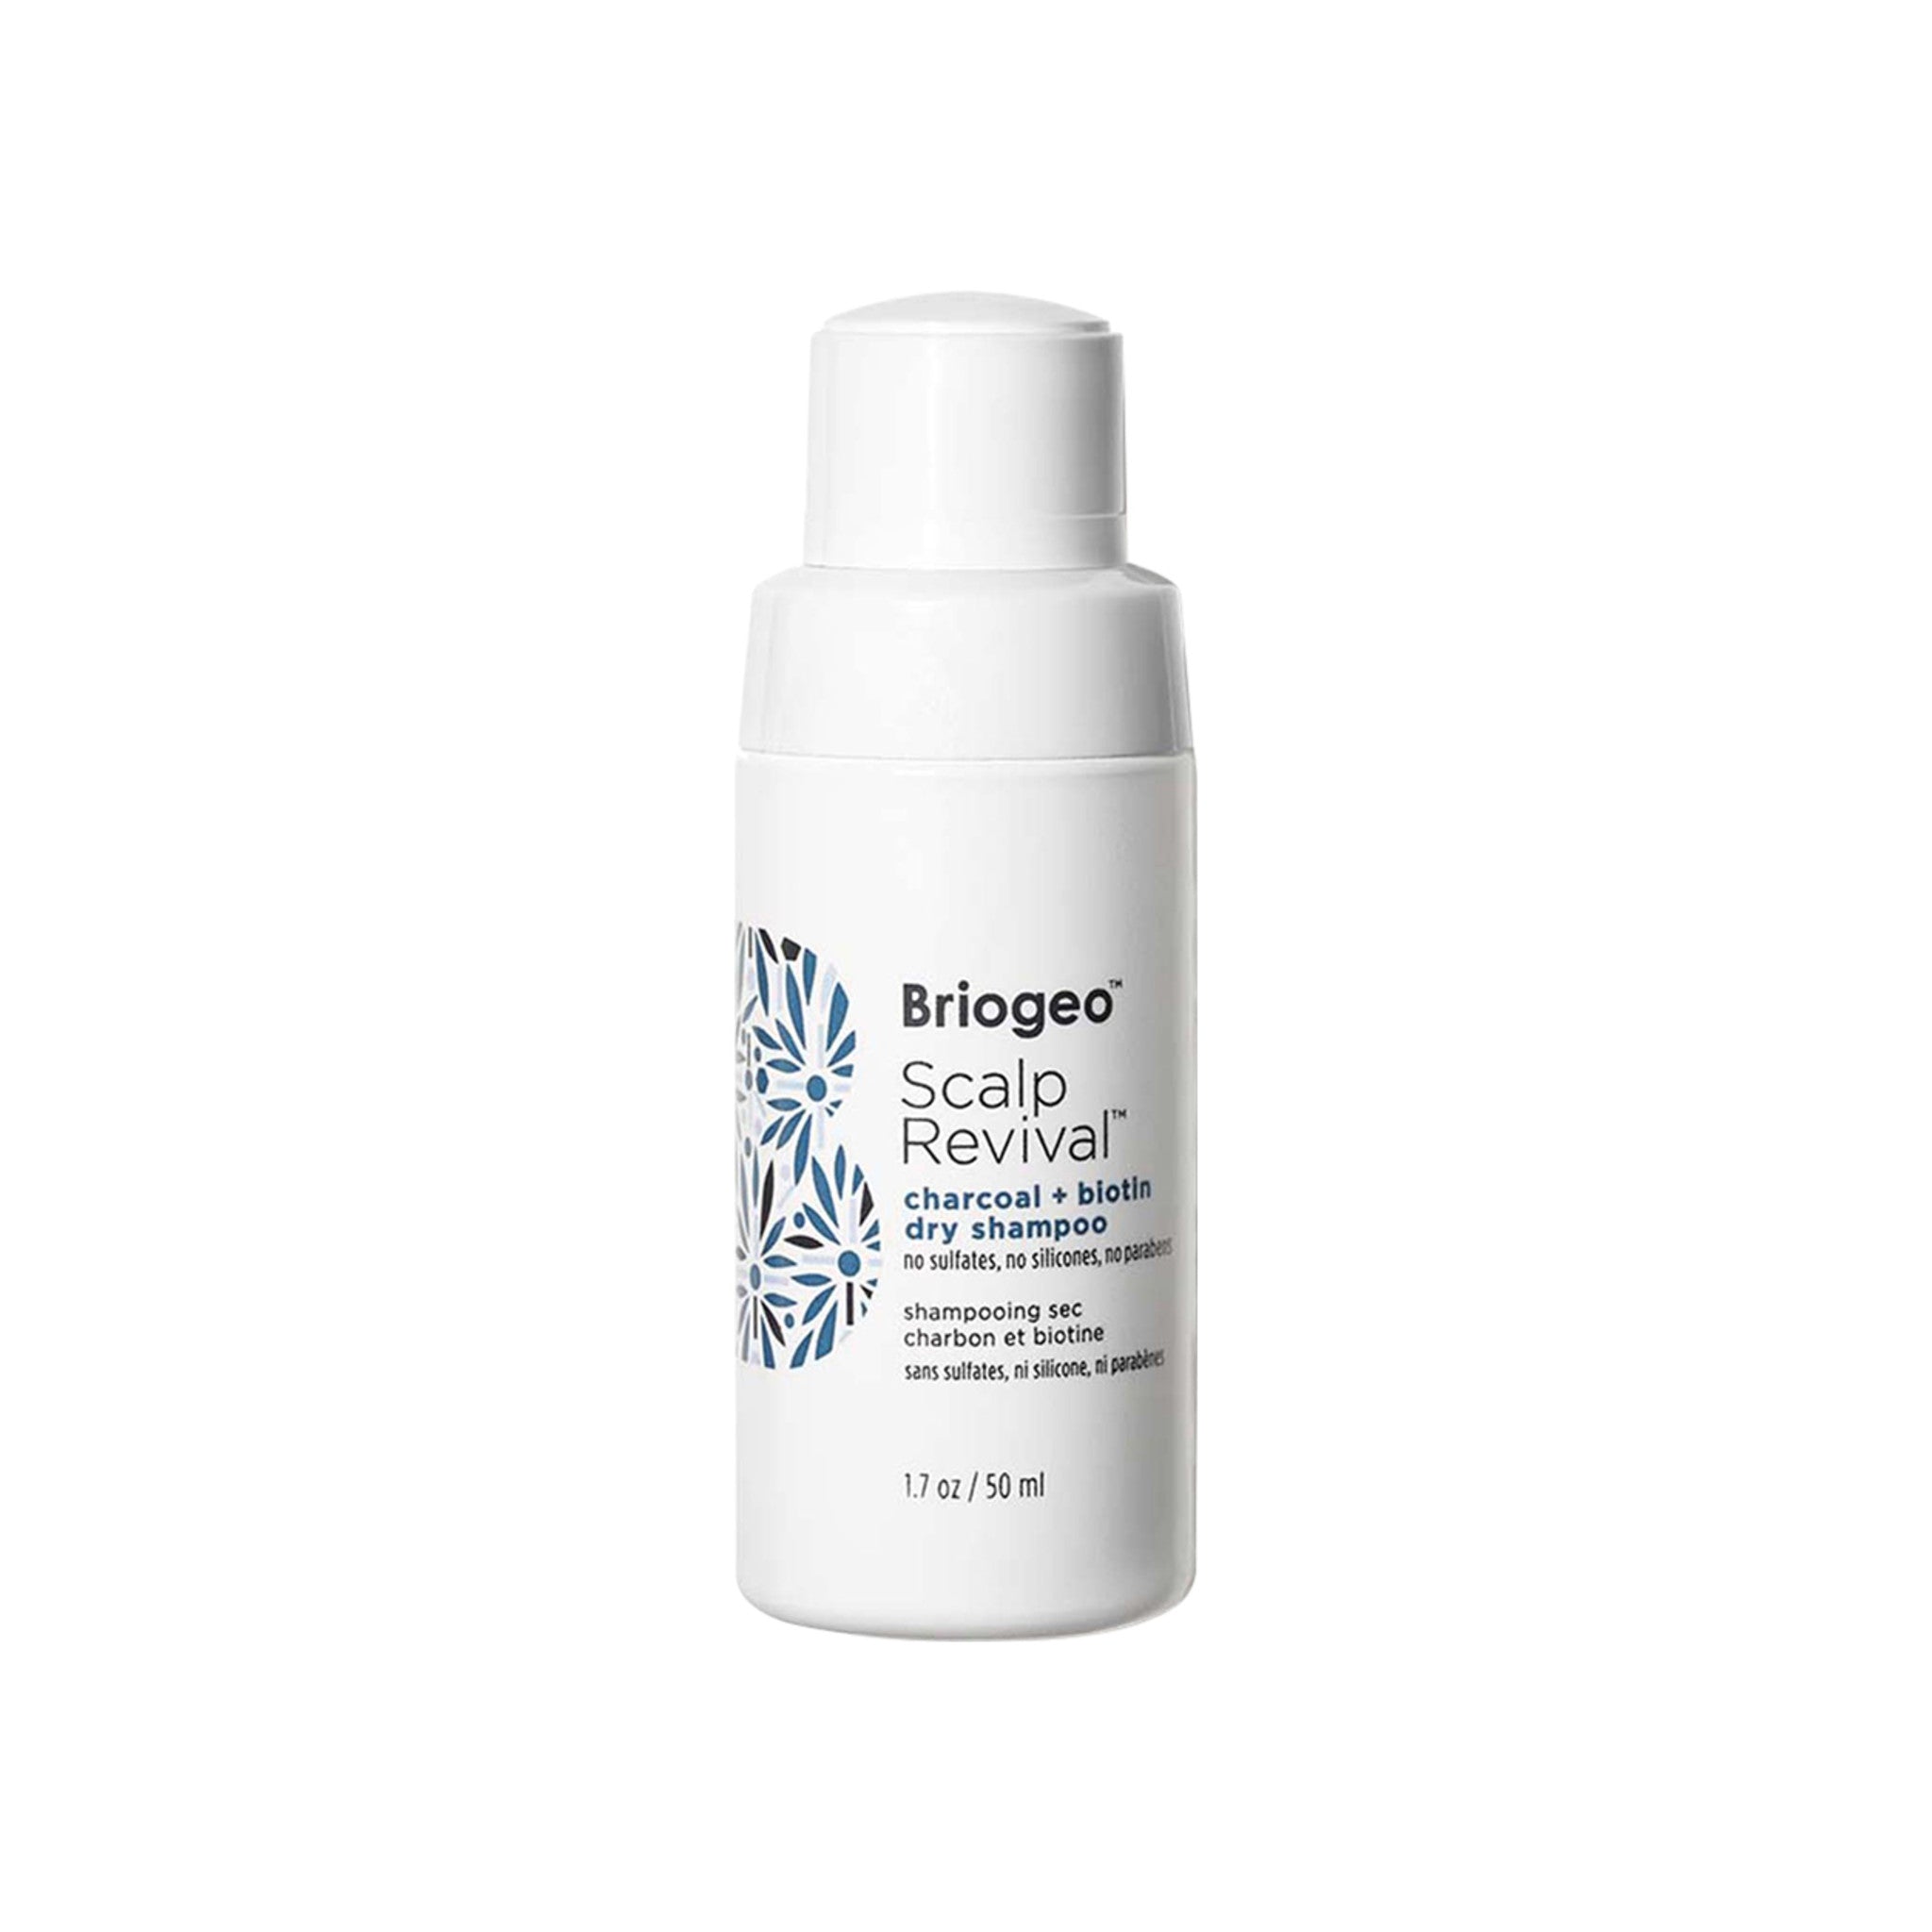 Briogeo Scalp Revival Charcoal and Biotin Dry Shampoo main image.